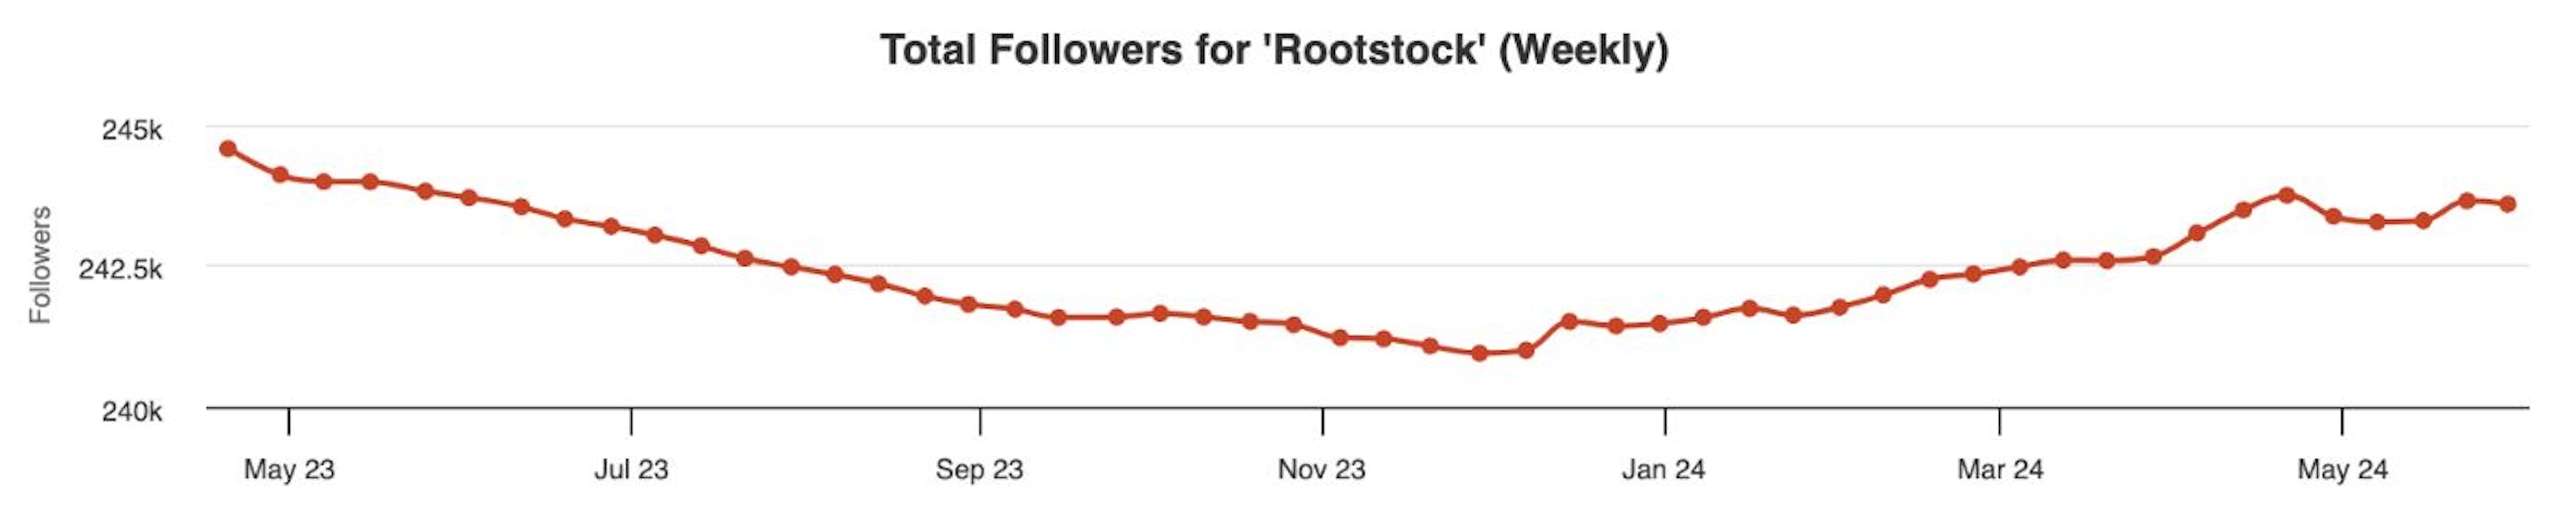 Dinâmica de seguidores do Rootstock no Twitter